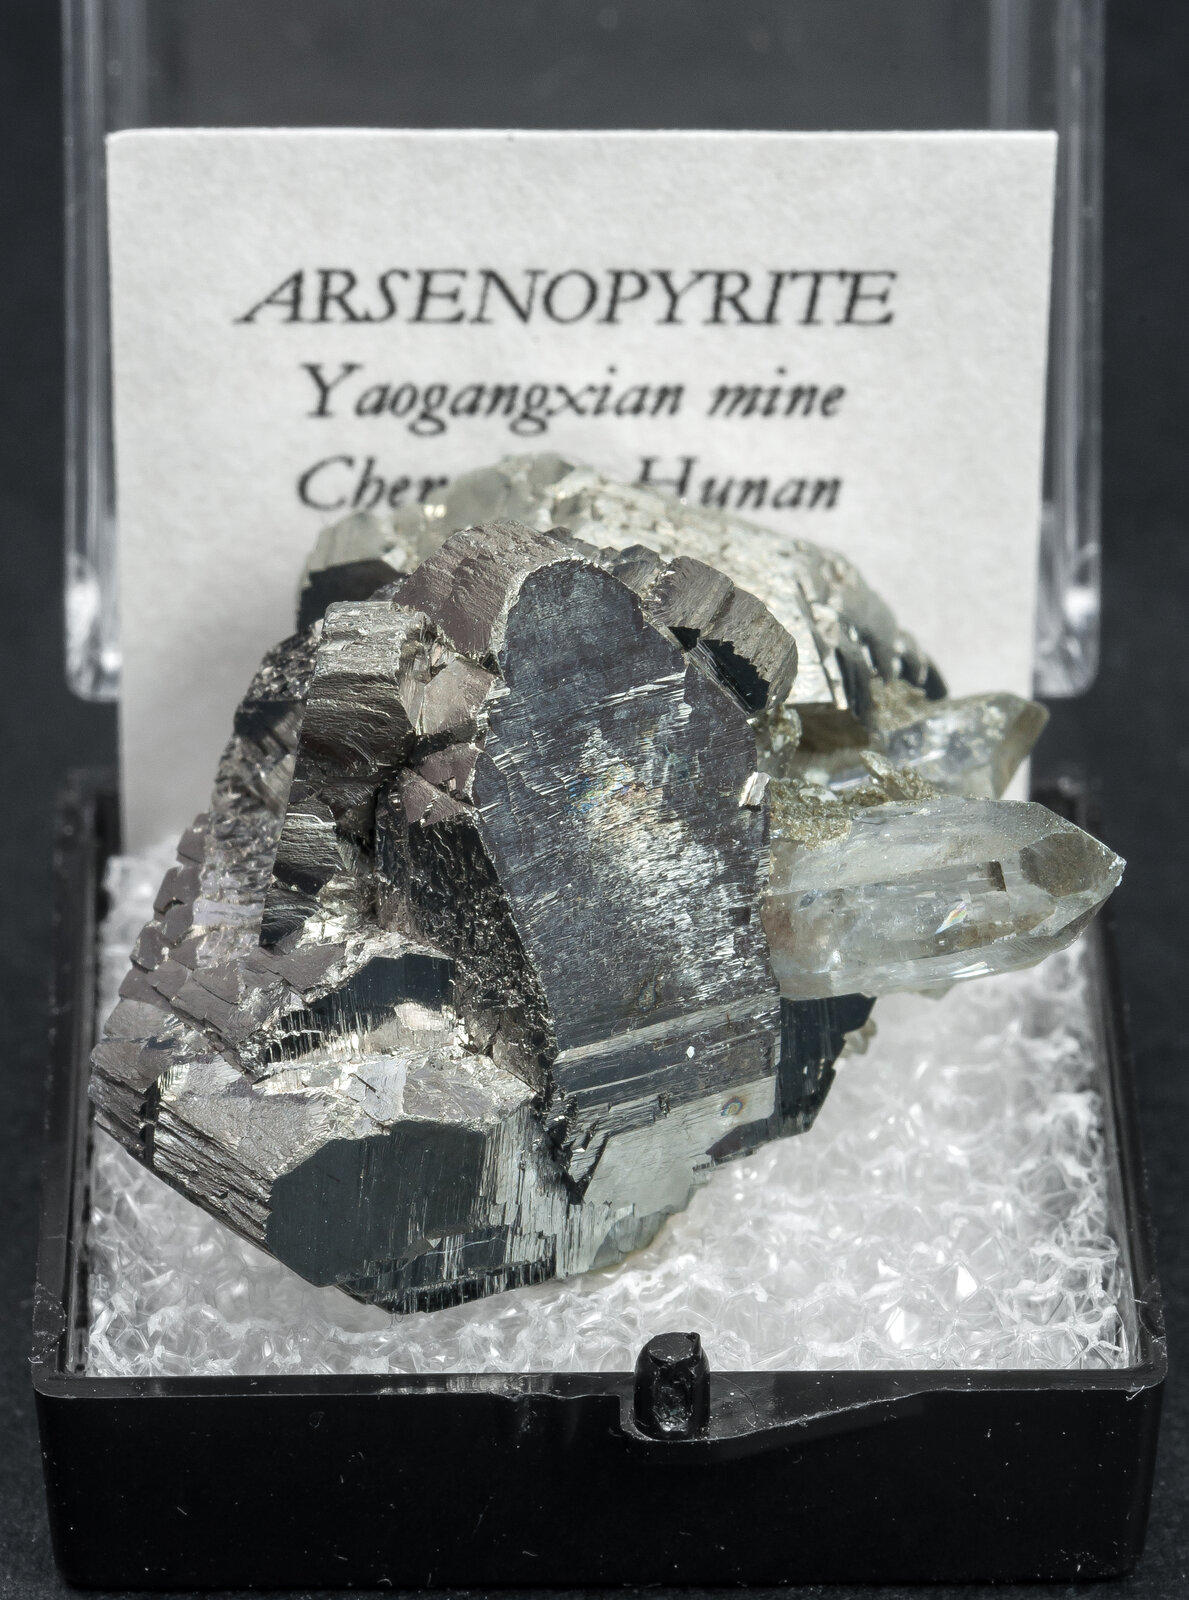 specimens/s_imagesAN2/Arsenopyrite-TY16AN2f1.jpg